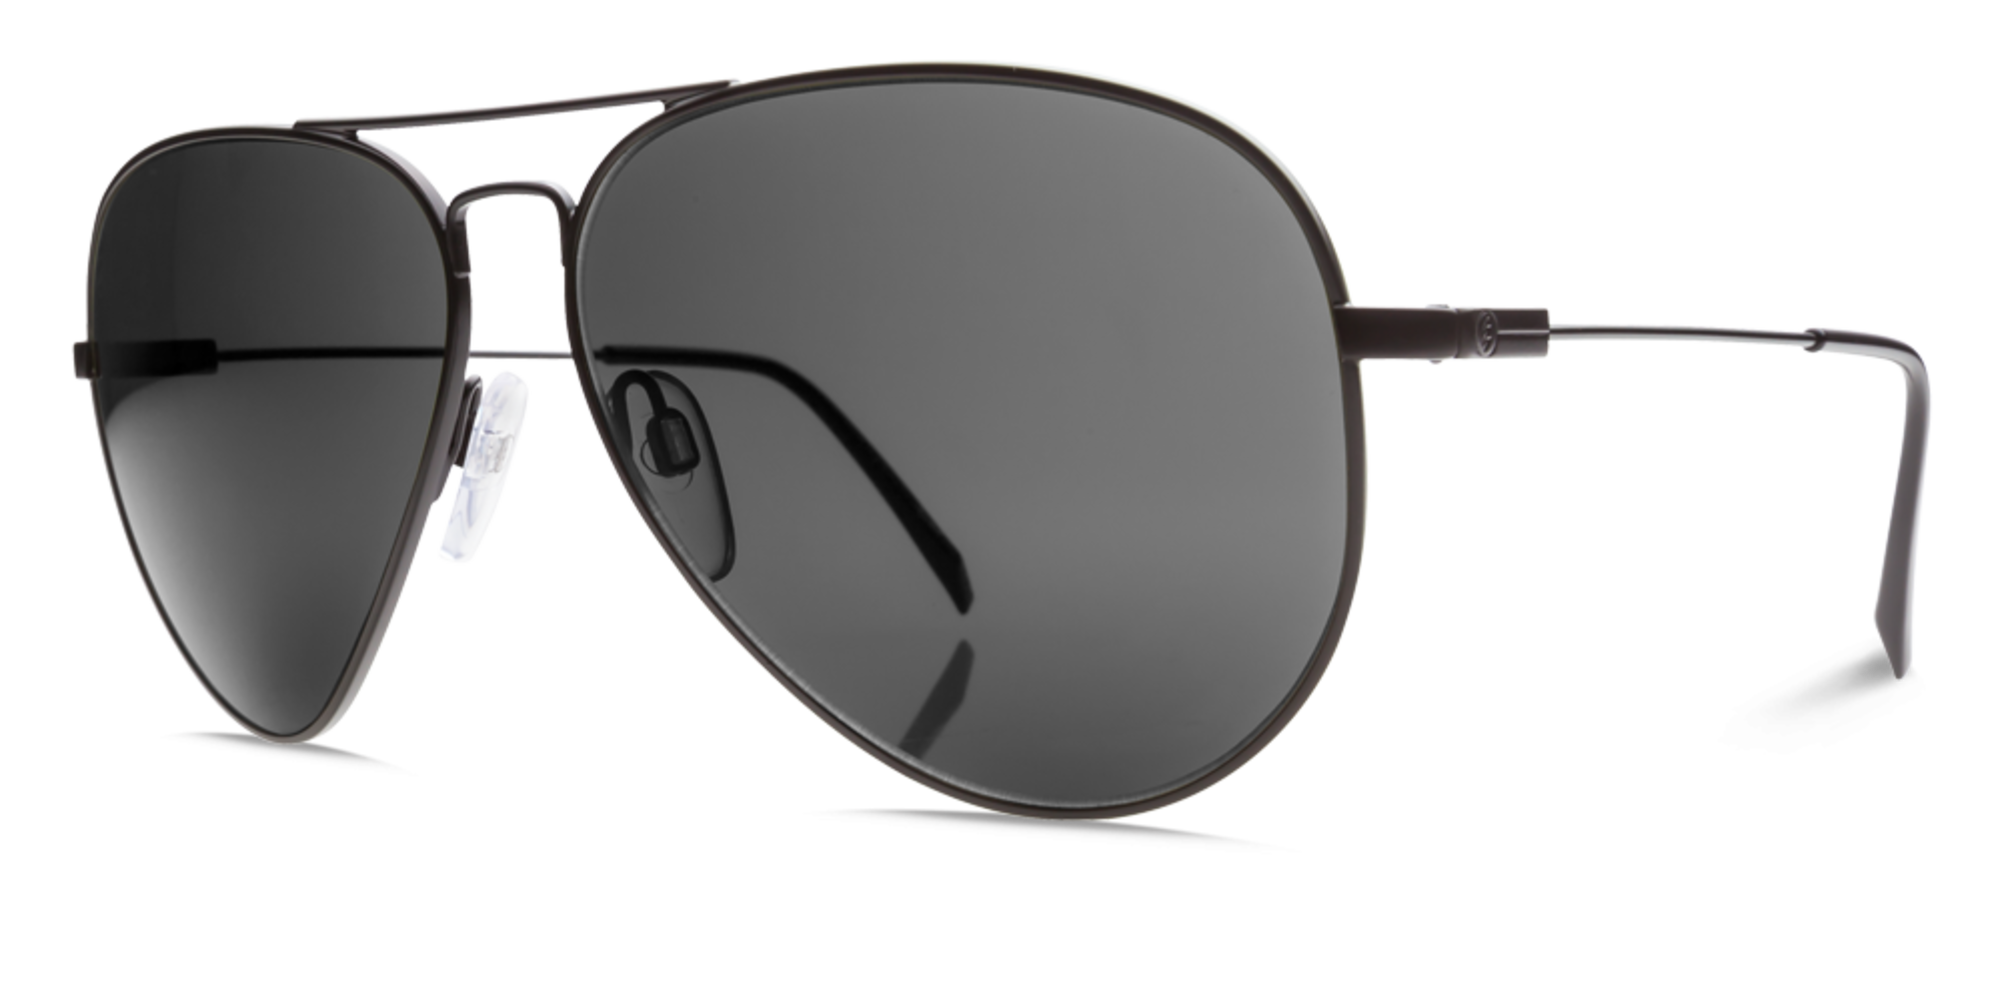 Sunglasses Oakley, Jim Lens Sunglass Maui Aviator Clipart